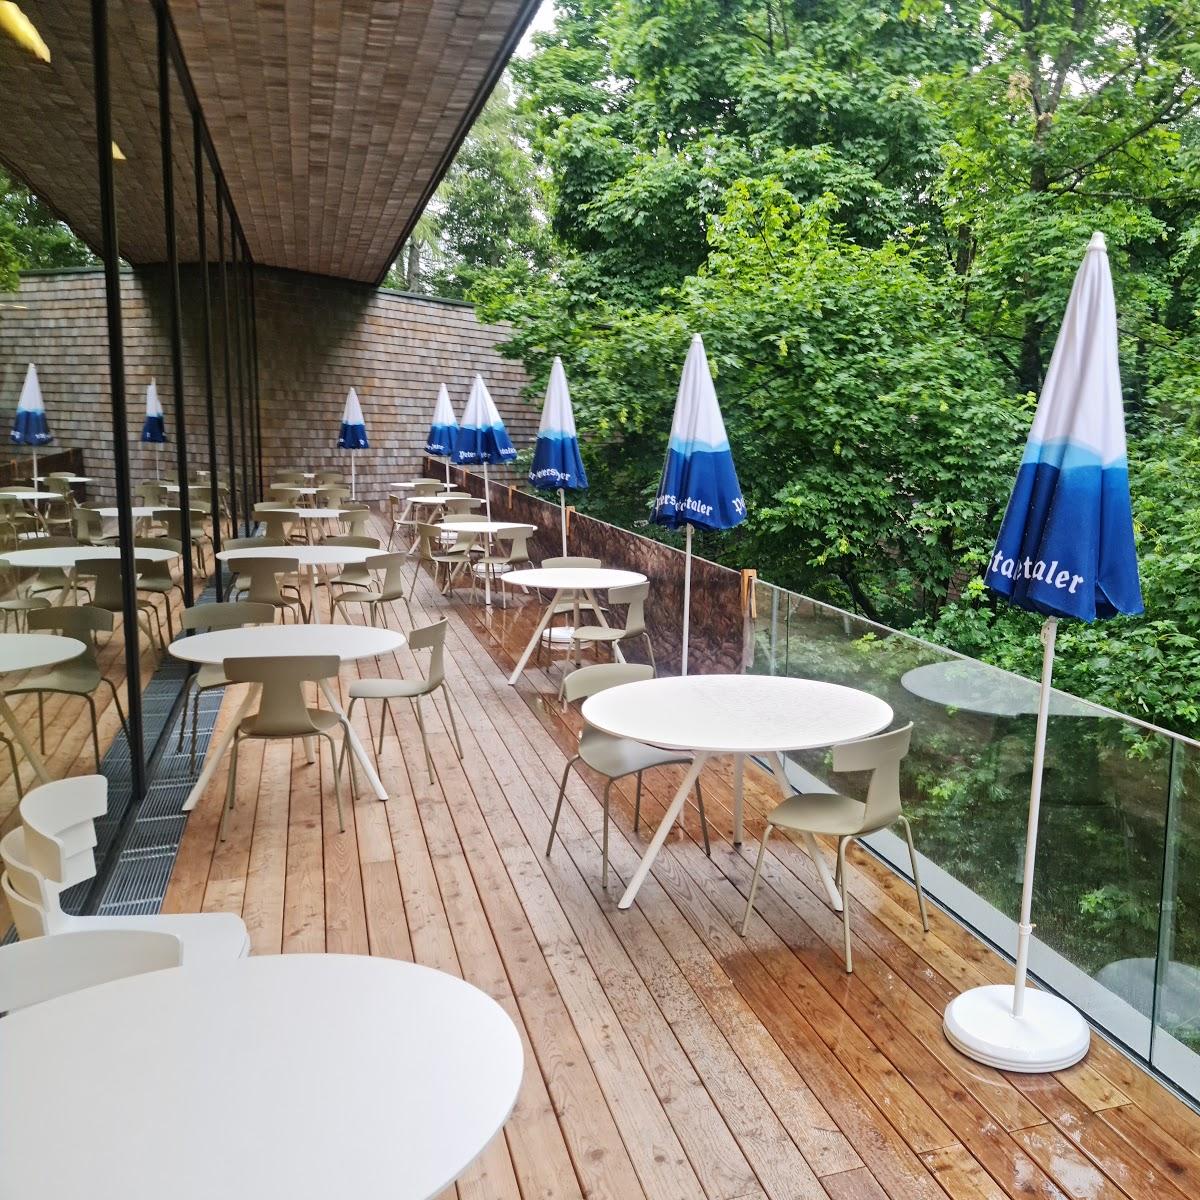 Restaurant "Nationalpark cafe Ruhestein" in Baiersbronn